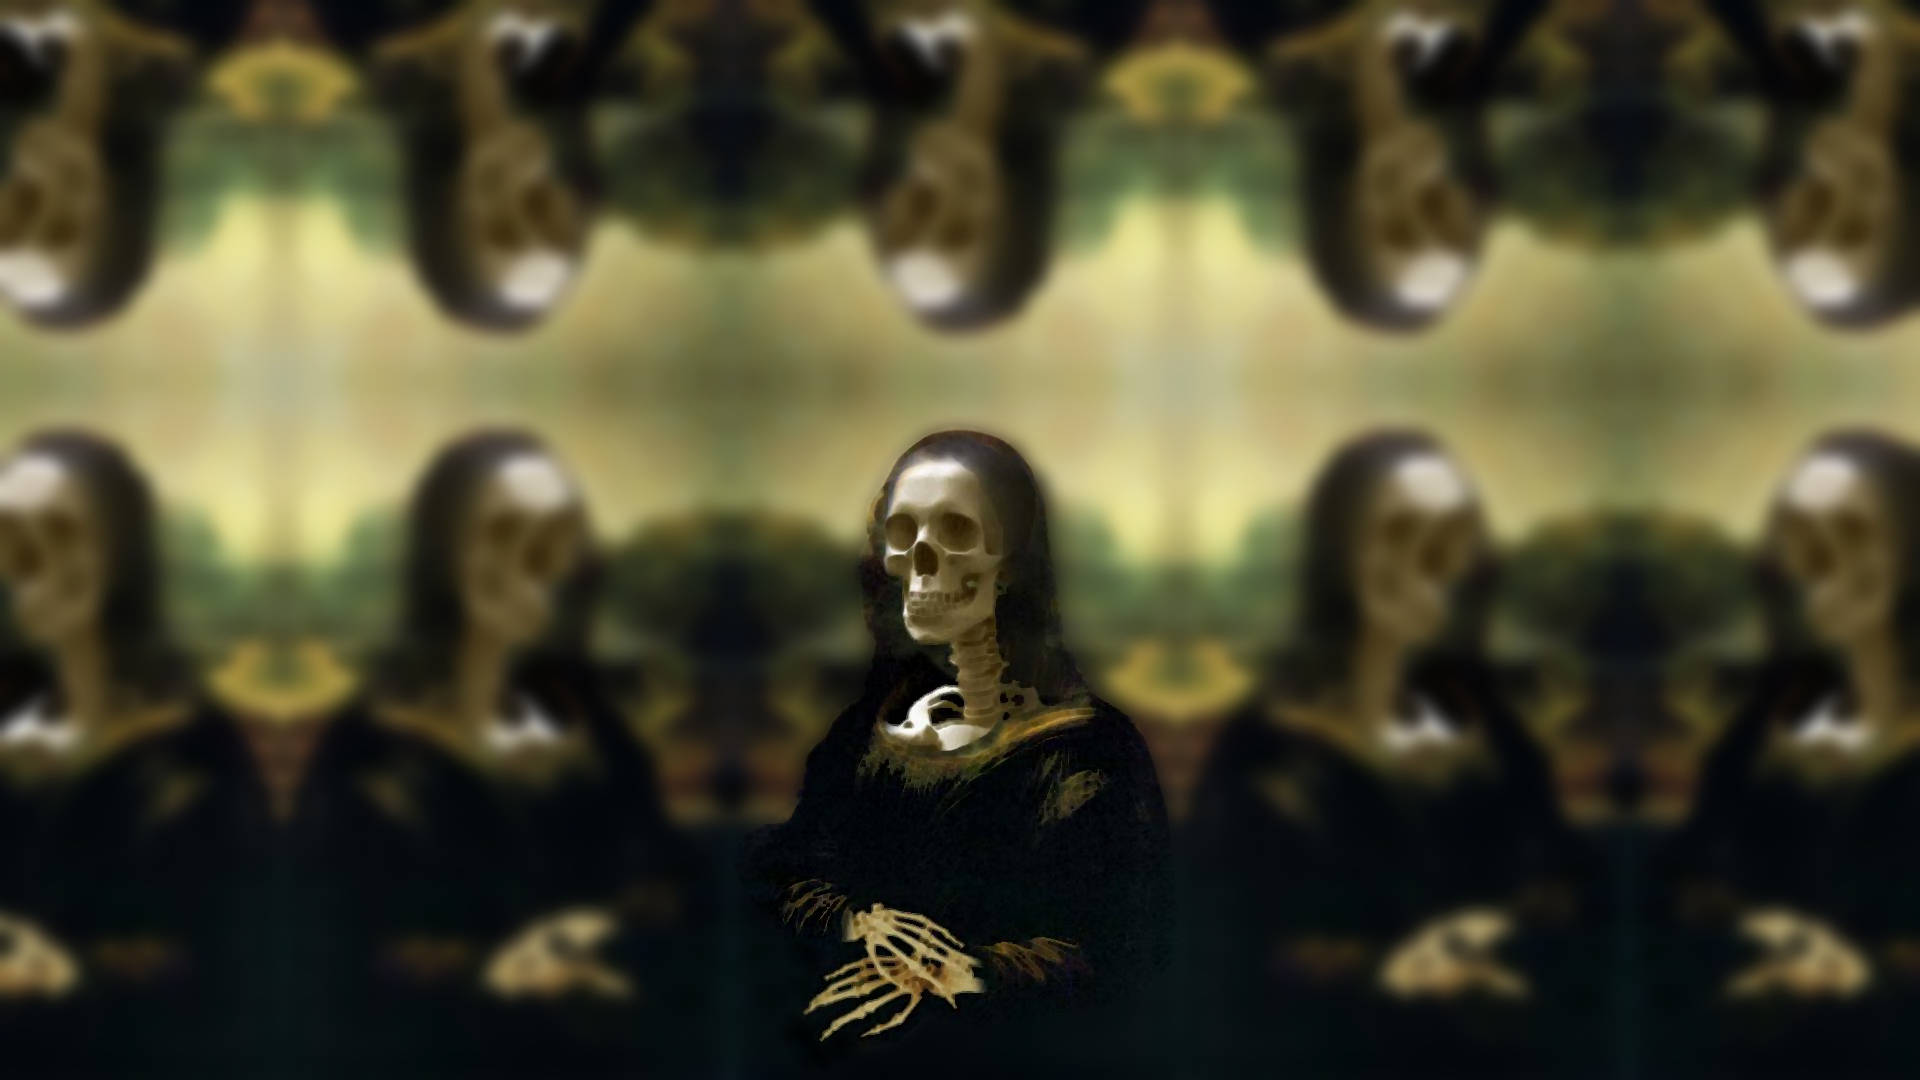 Mona Lisa Skeleton